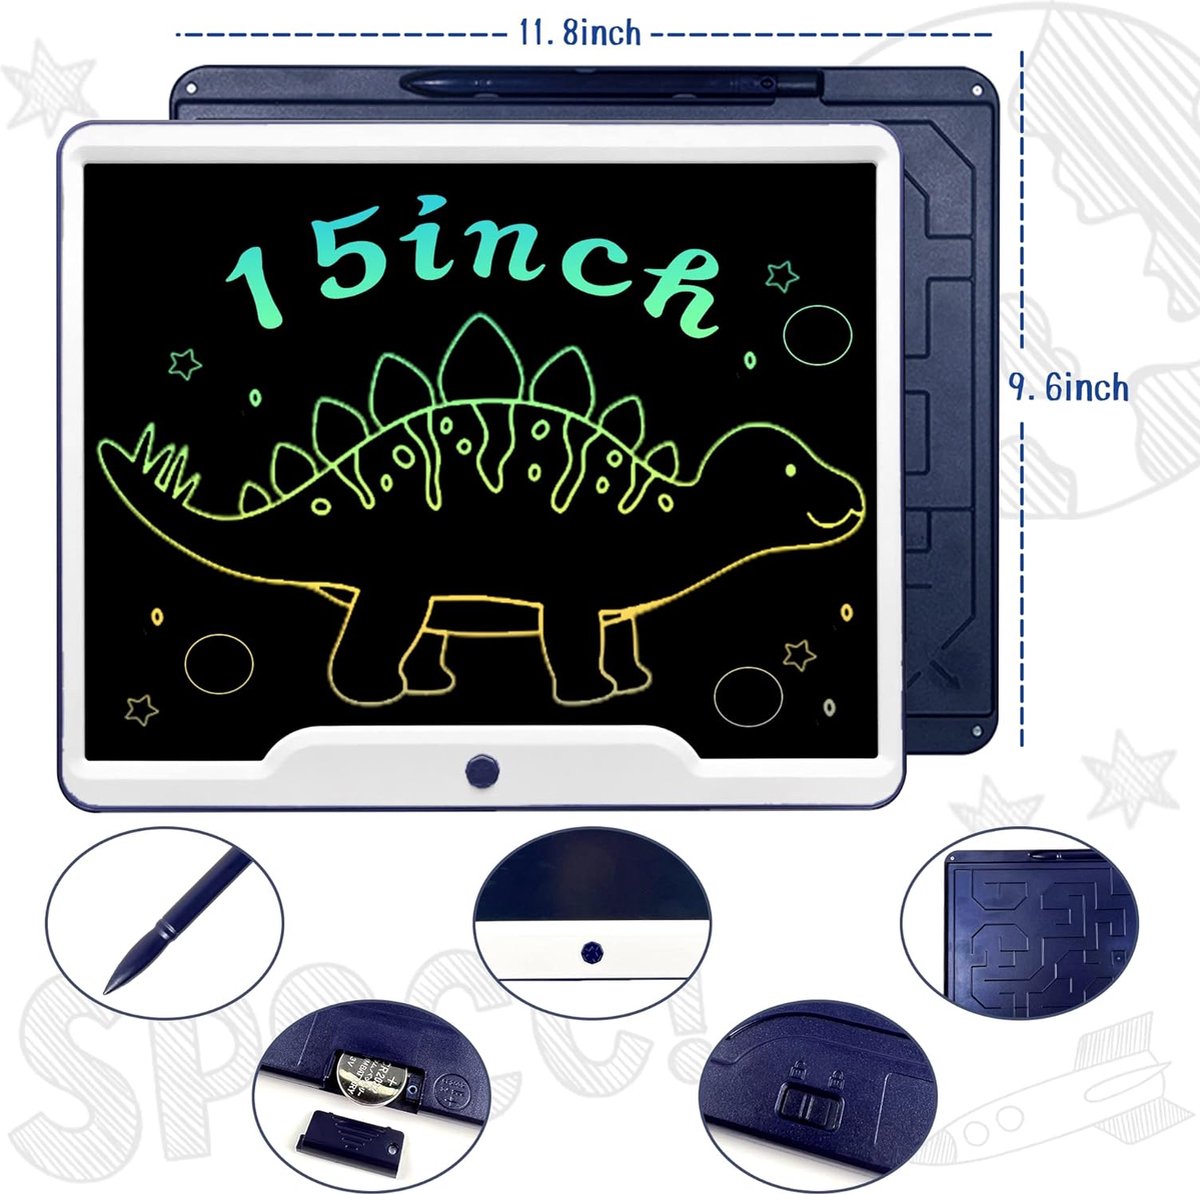 Elysium Tekentablet - Grafische Tekentablet - Tekentablet Kinderen - Drawing tablet - Blauw